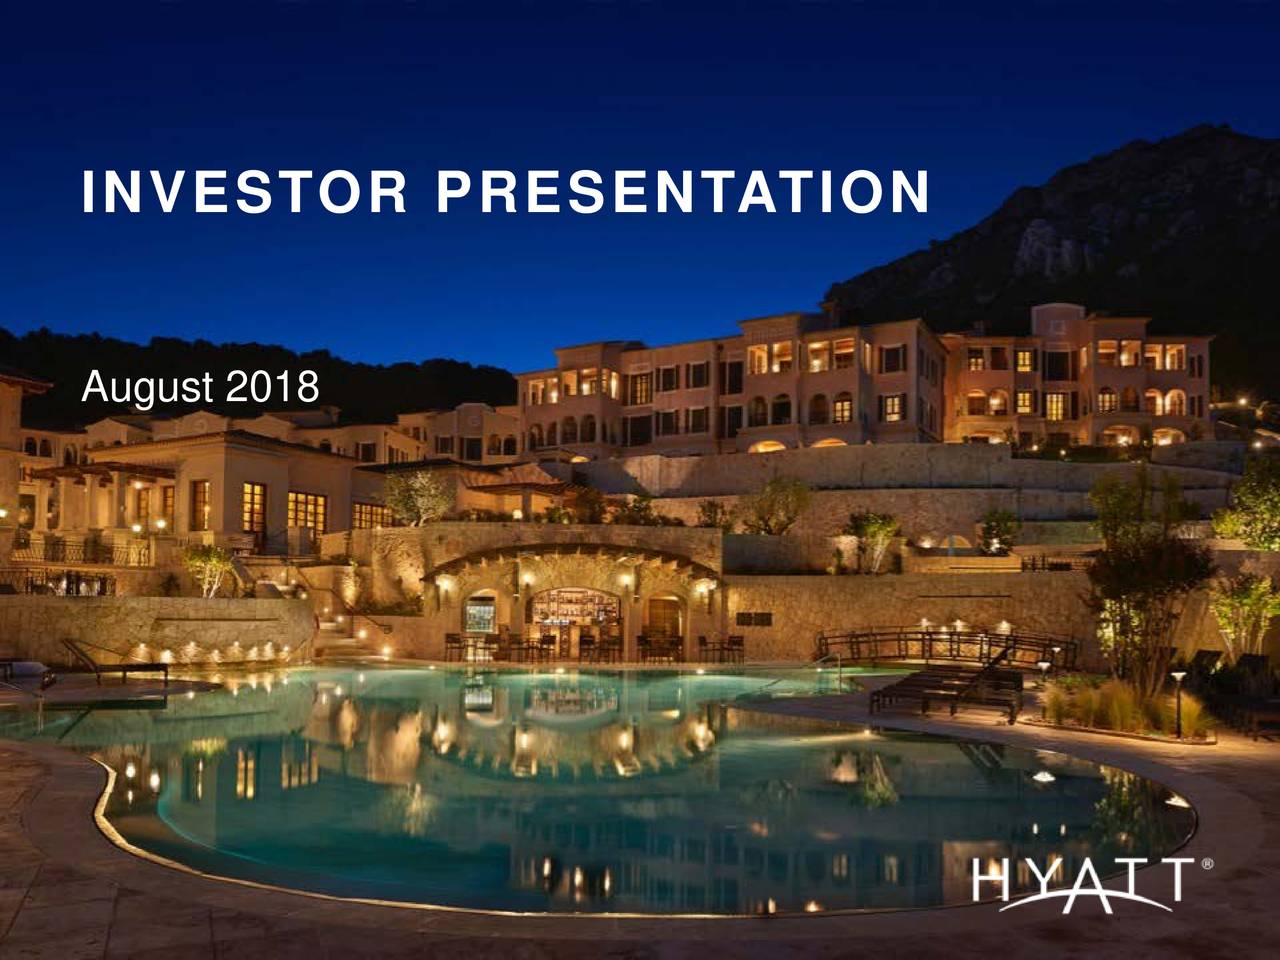 Hyatt Hotels Corporation 2018 Q2 Results Earnings Call Slides (NYSE